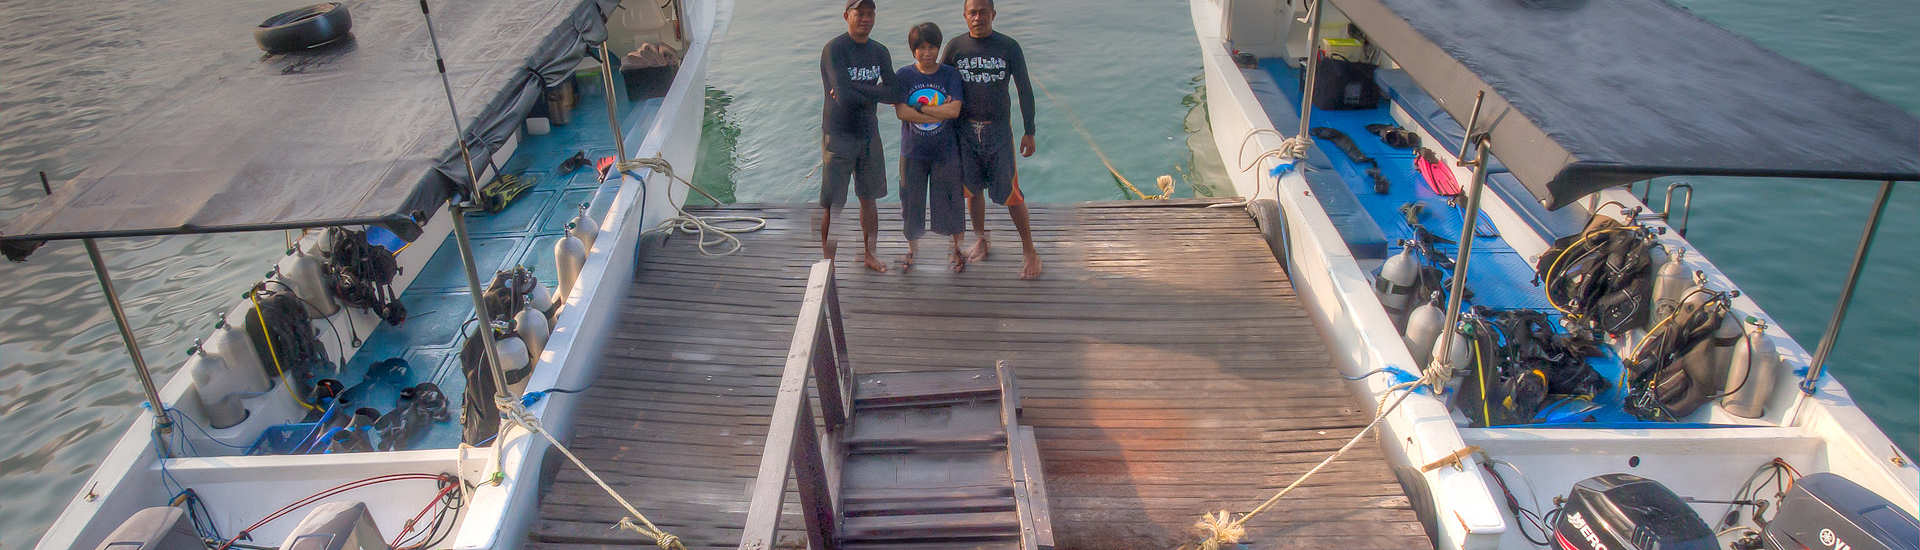 Maluku Divers – Tauchbasis auf Ambon, Indonesie 